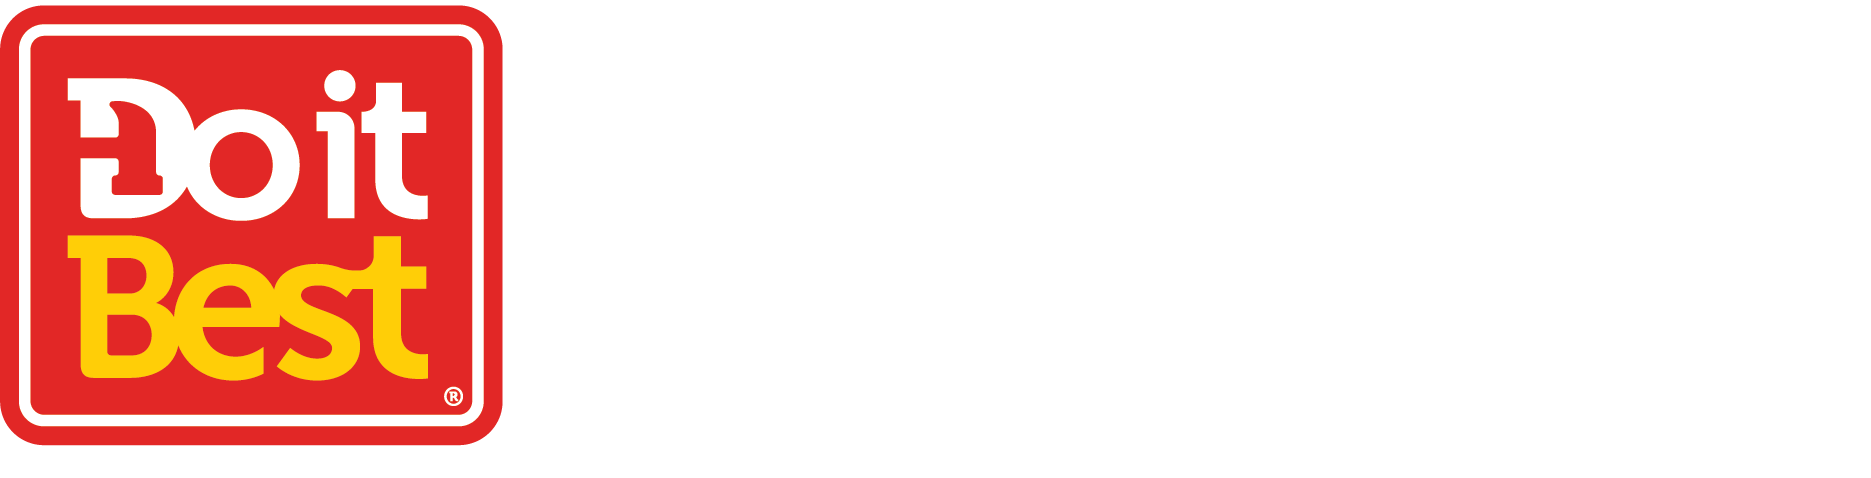 Company logo for 'Vassar Building Center'.